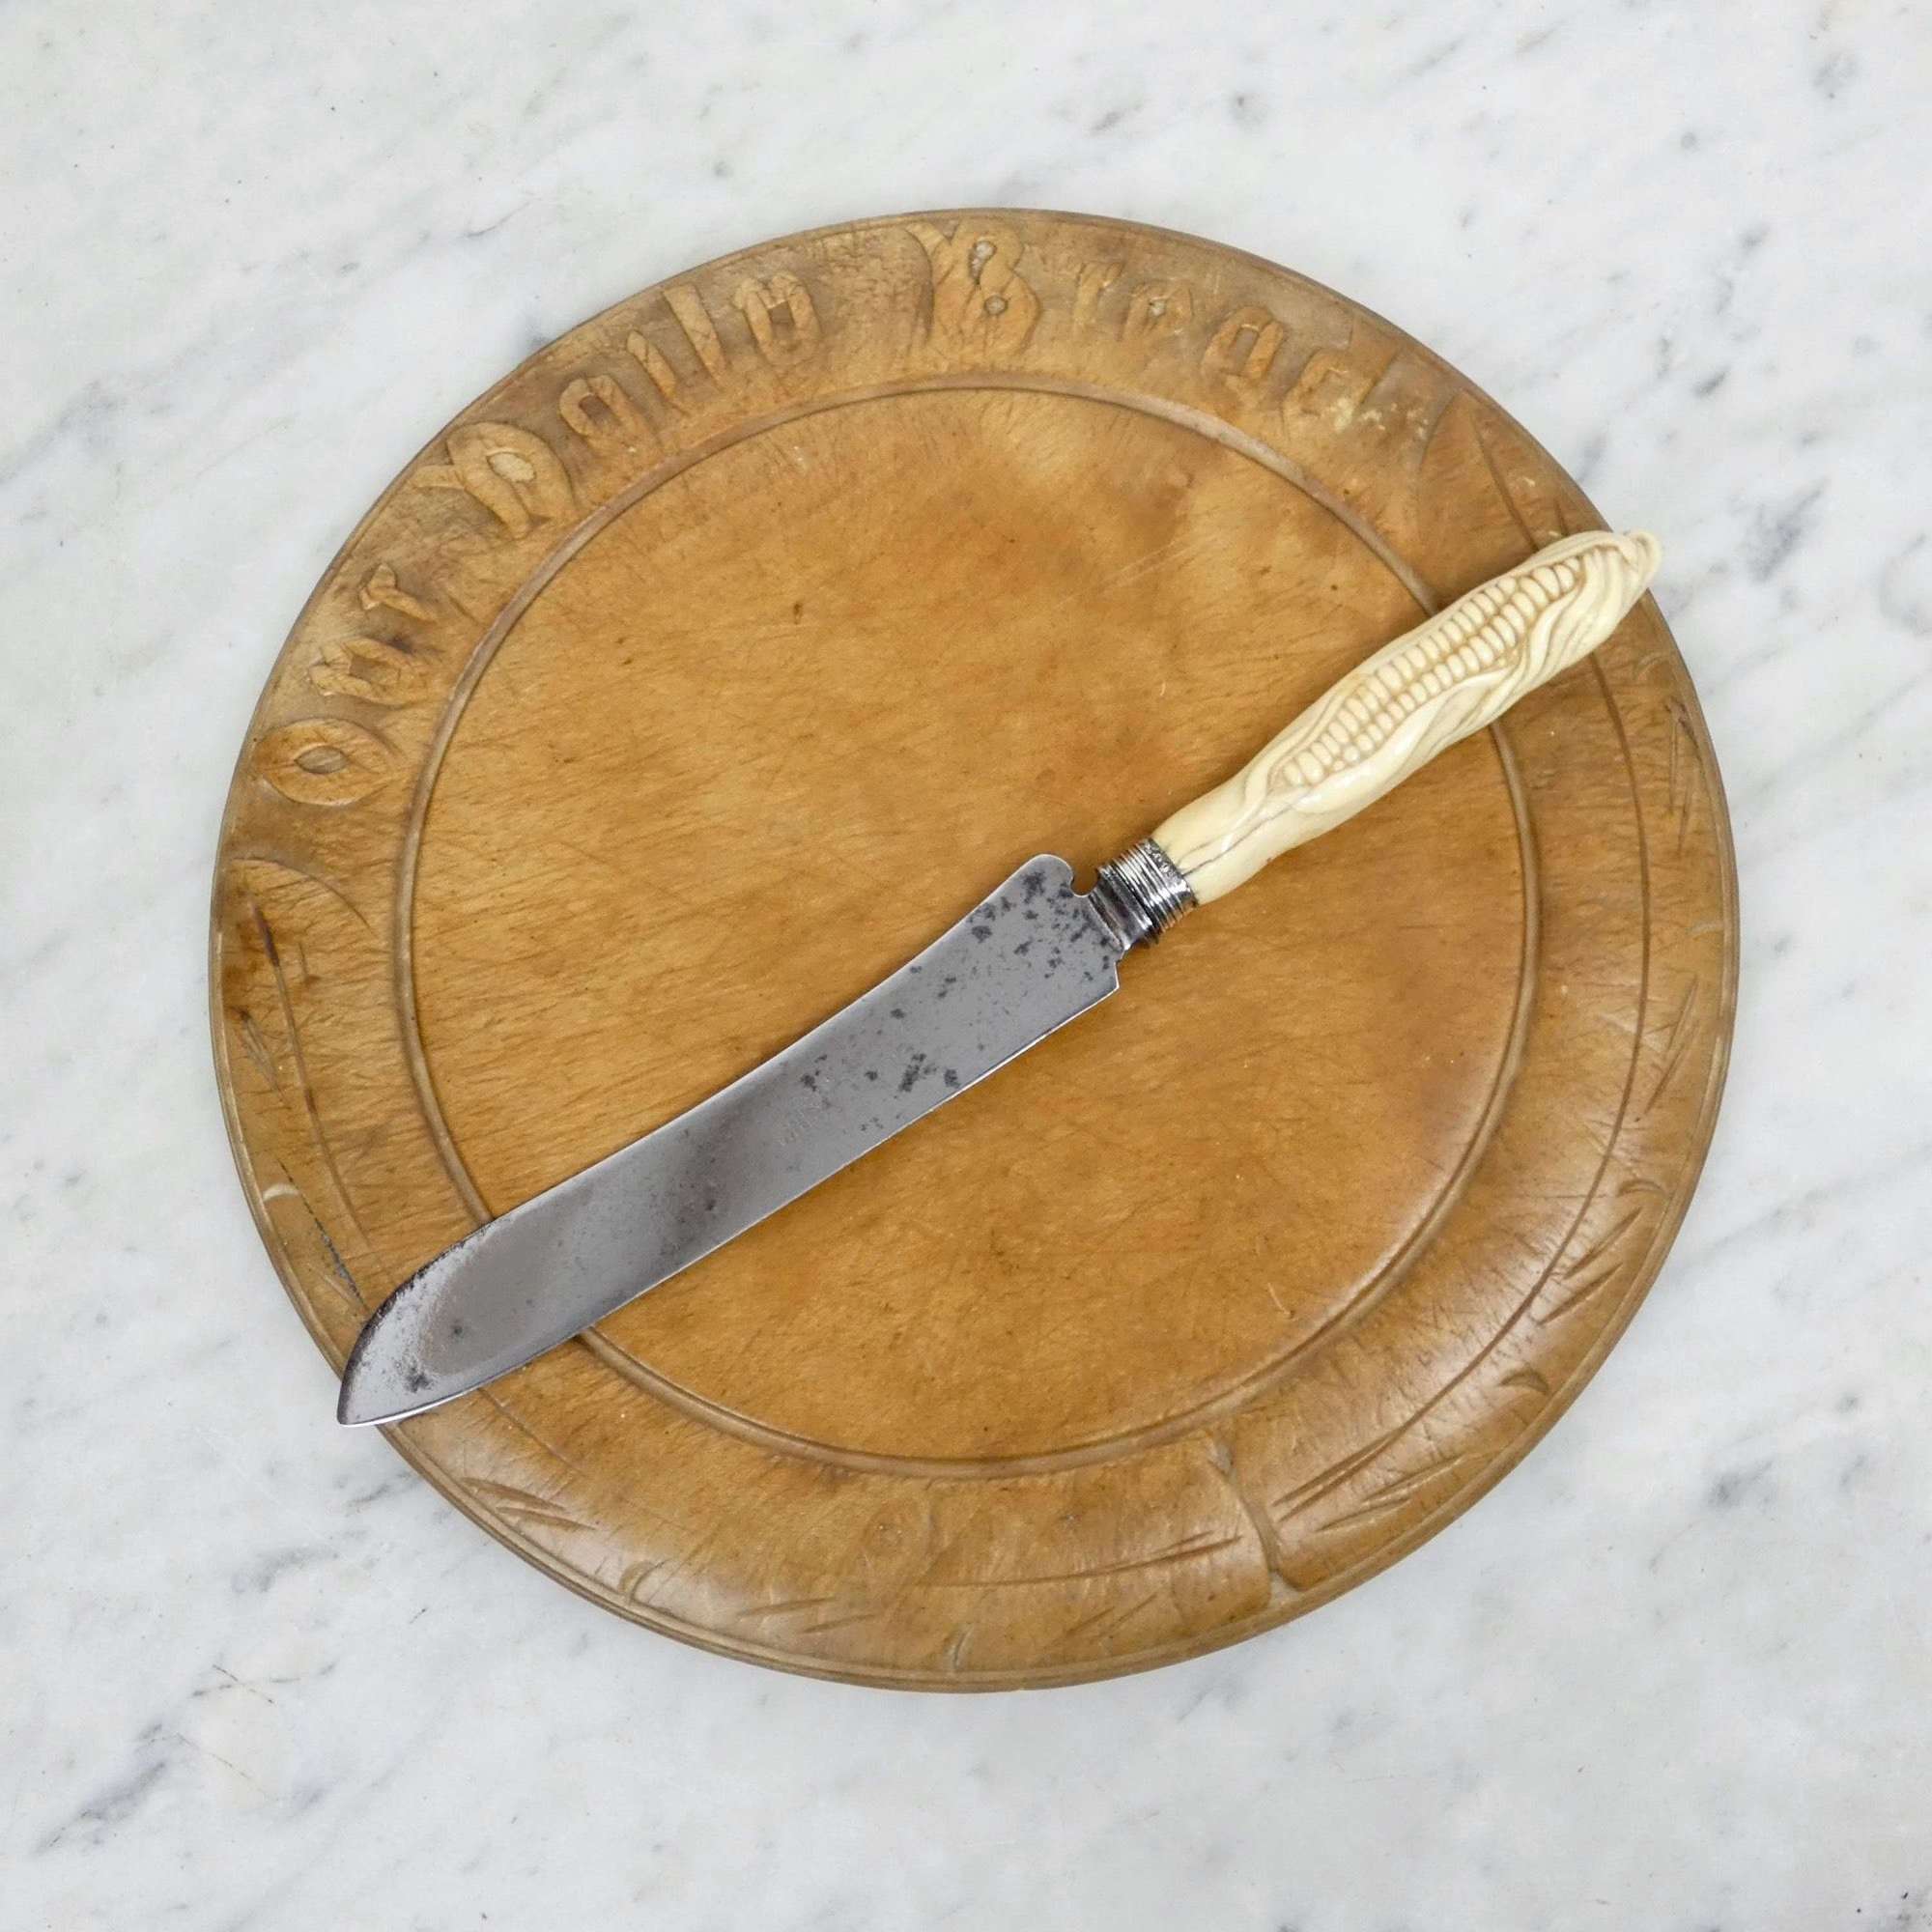 Ivory Handled Bread Knife